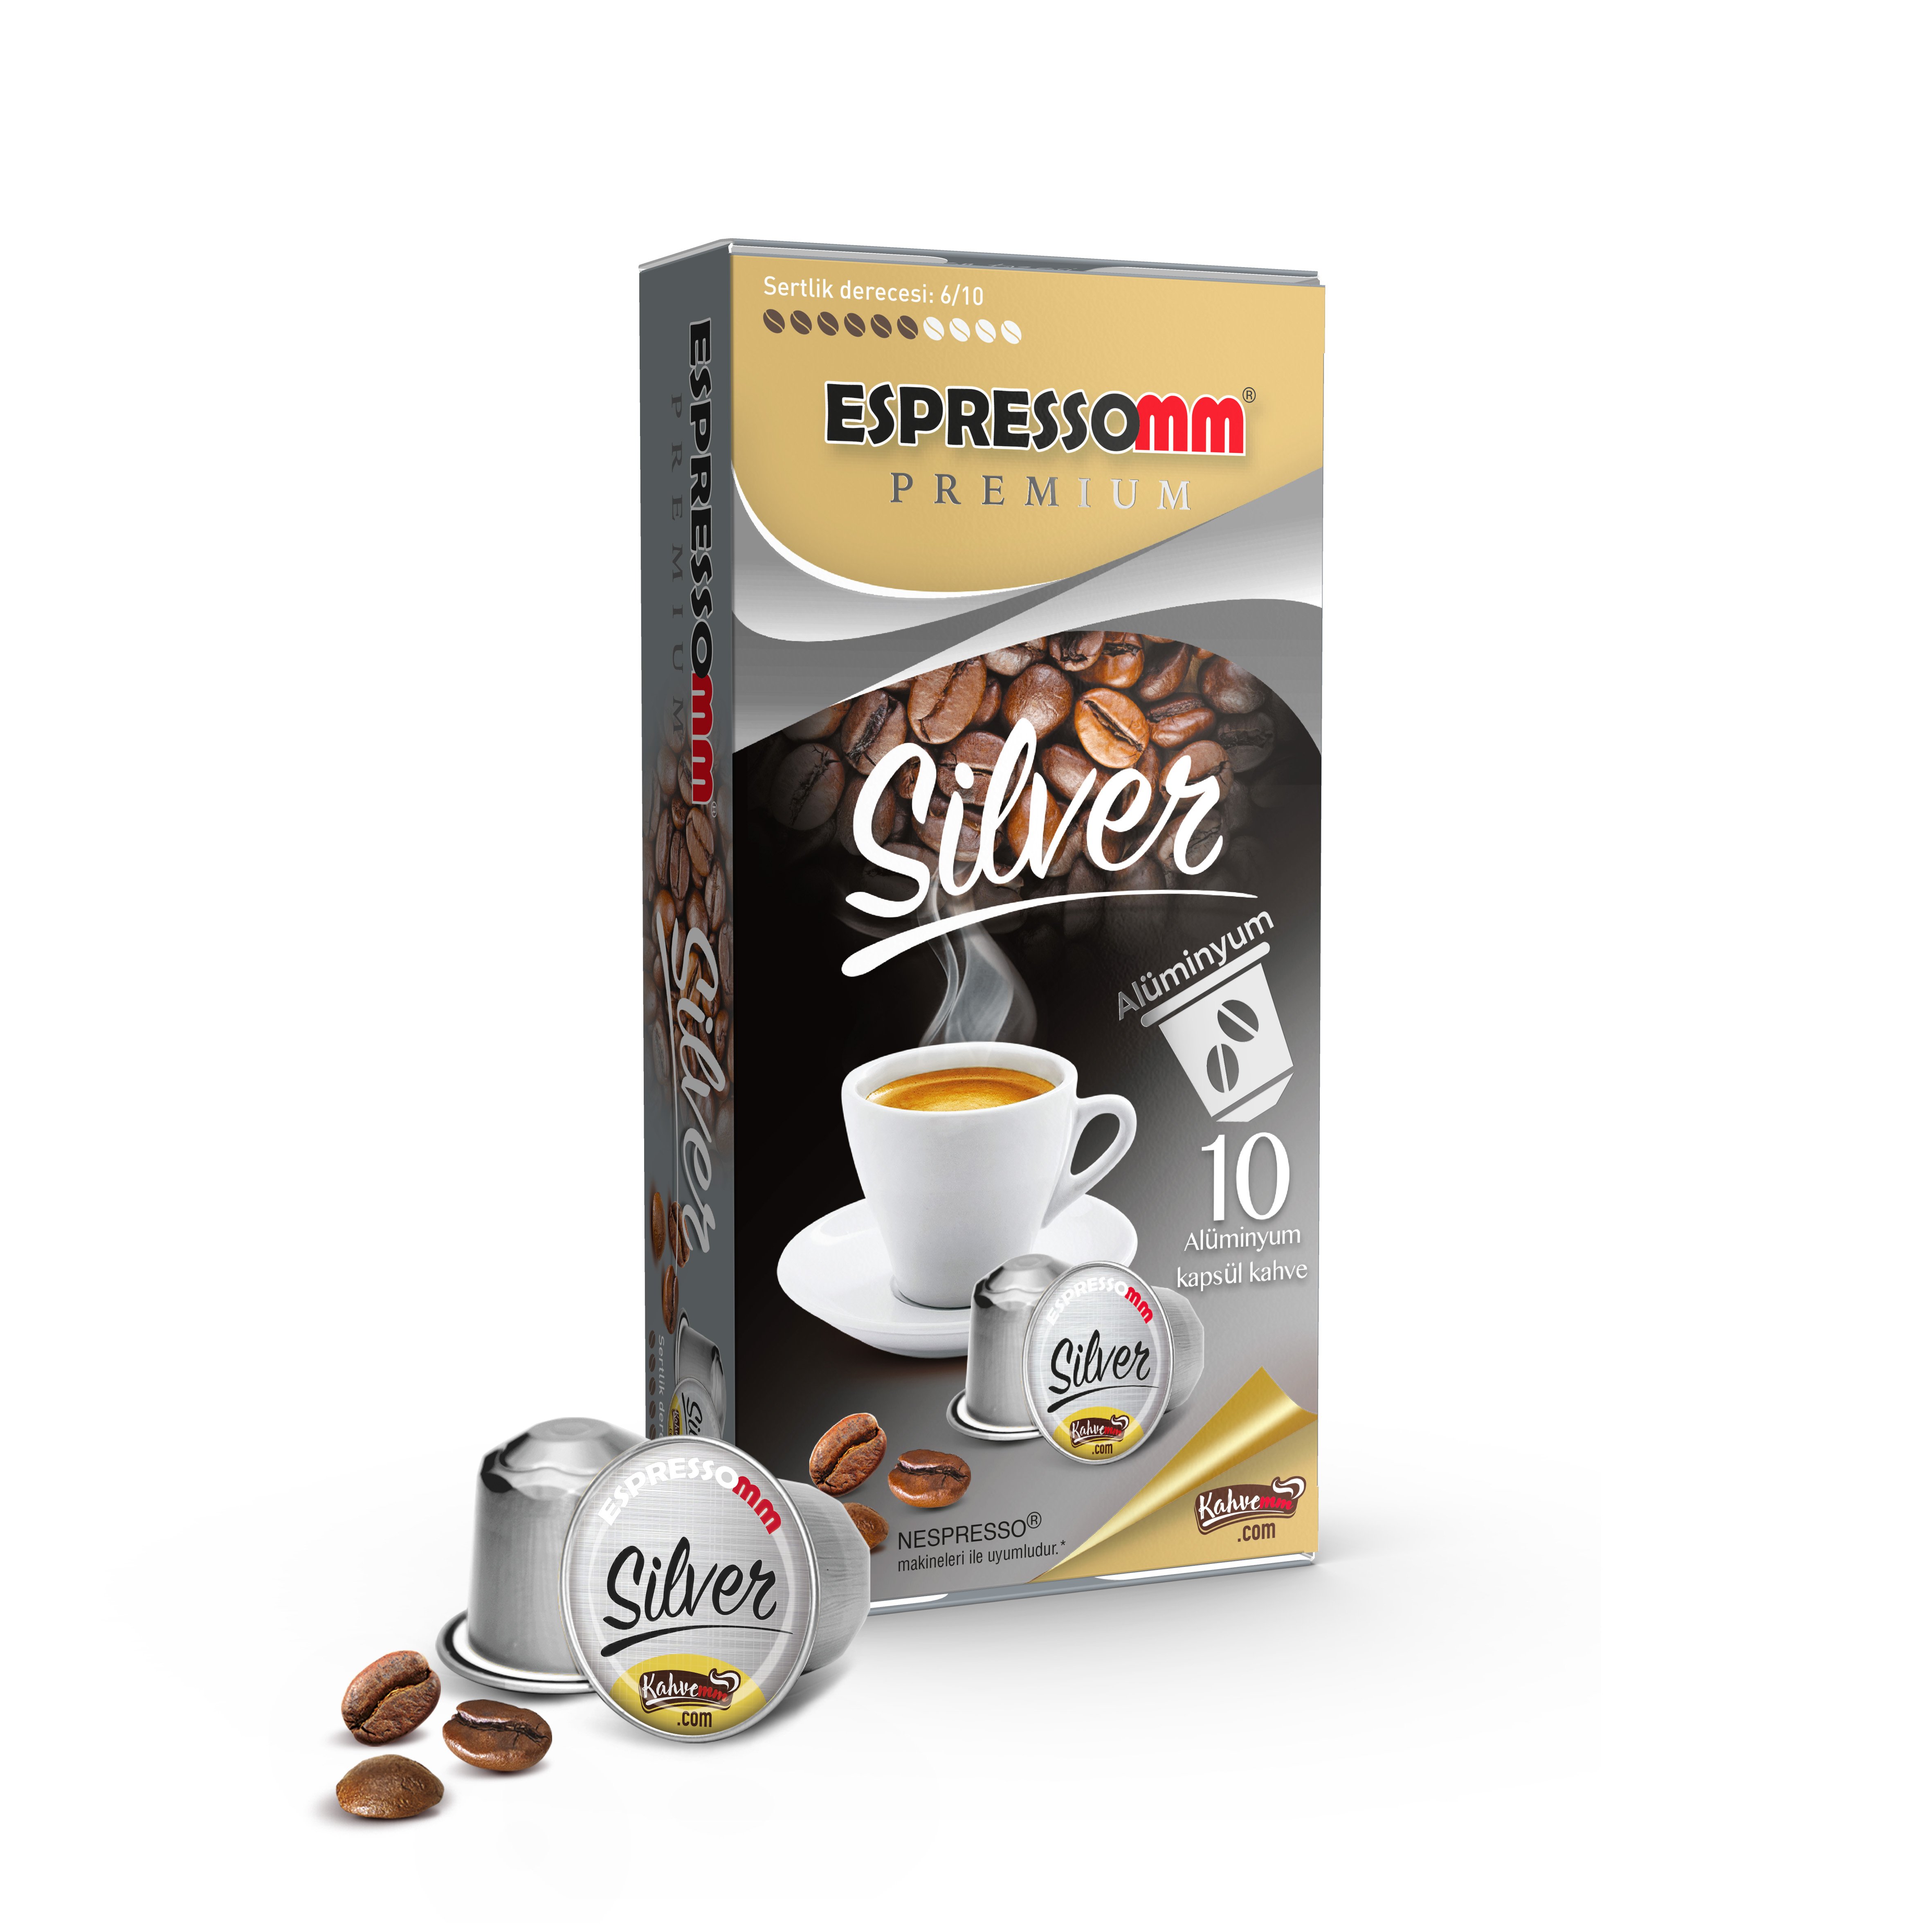 Espressomm® Premium Silver Alüminyum Kapsül Kahve (10 Adet) - Nespresso® Uyumlu*